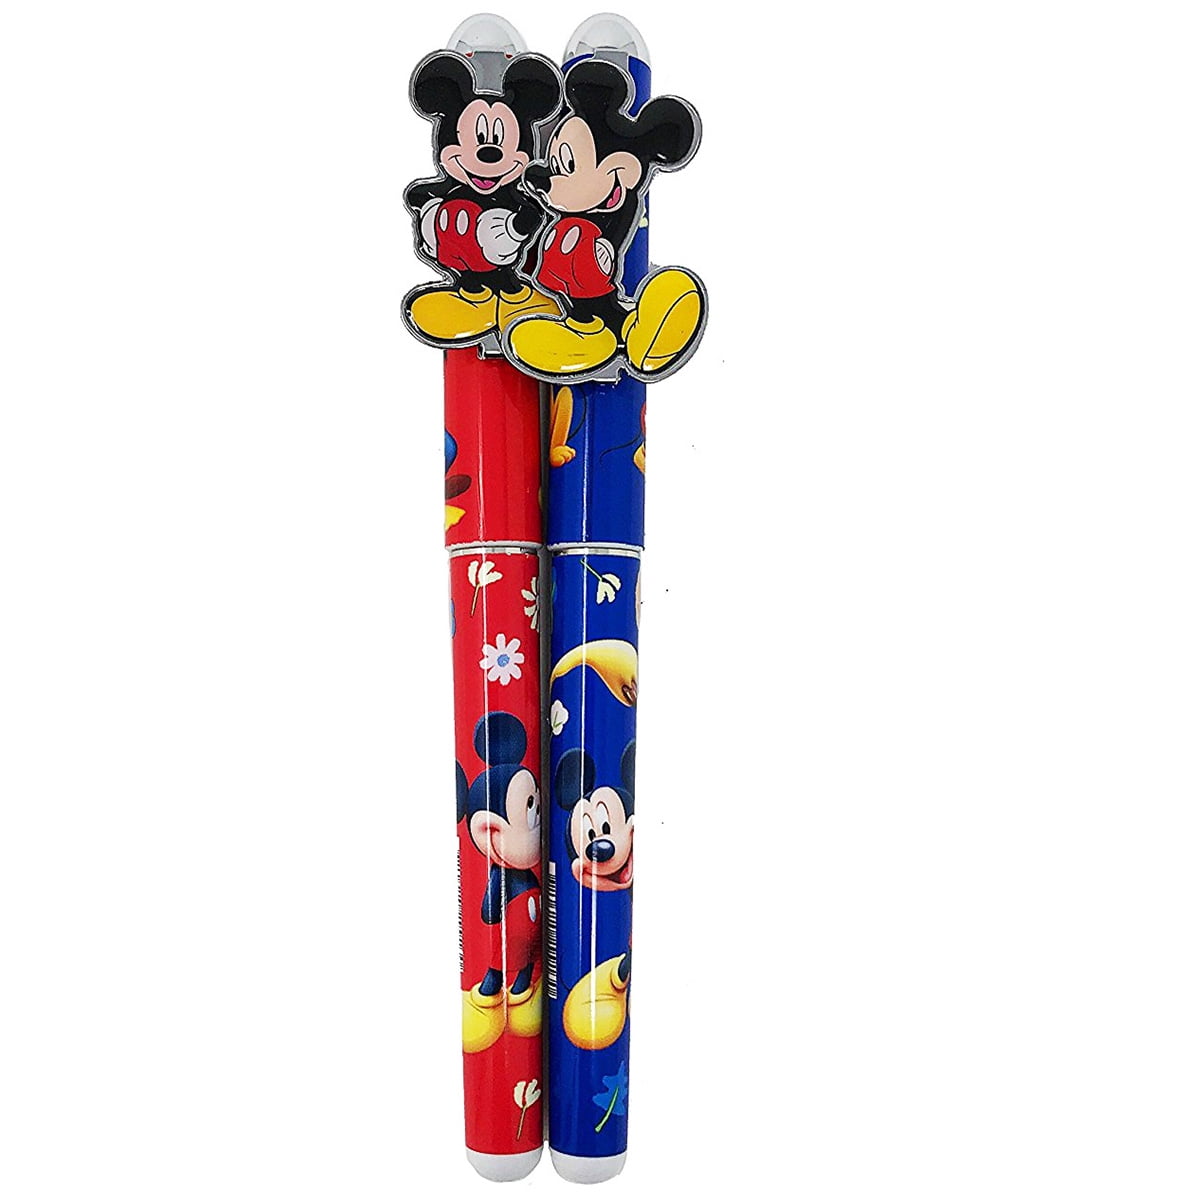 Pens Disney Fancy pen 3 set Red Blue Black Mickey Mouse Design New 